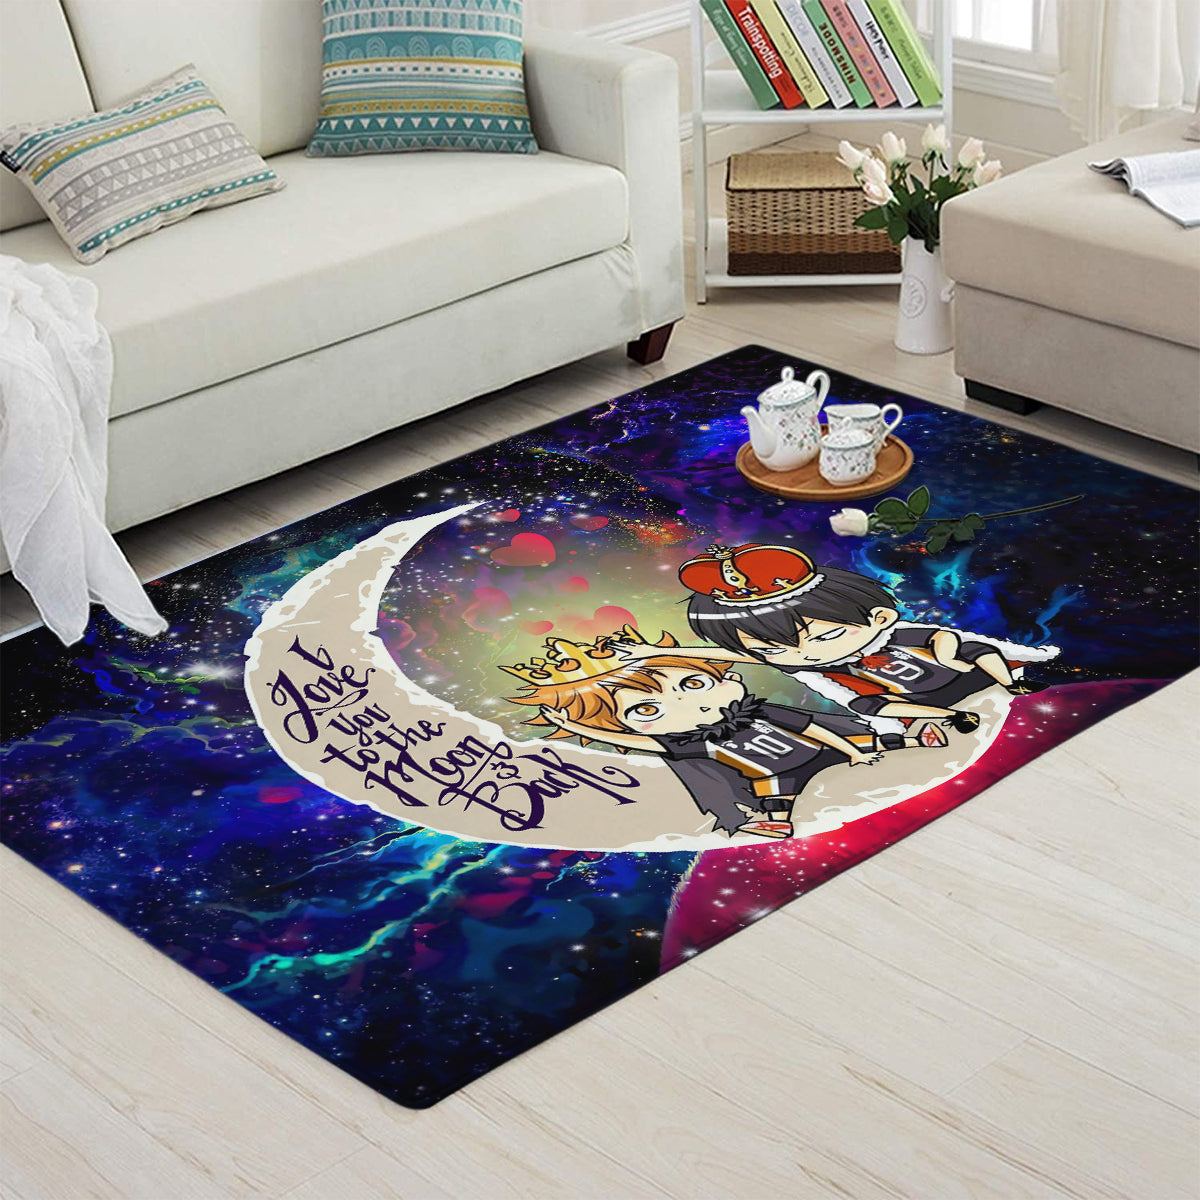 Hinata And Tobio Haikyuu Love You To The Moon Galaxy Carpet Rug Home Room Decor